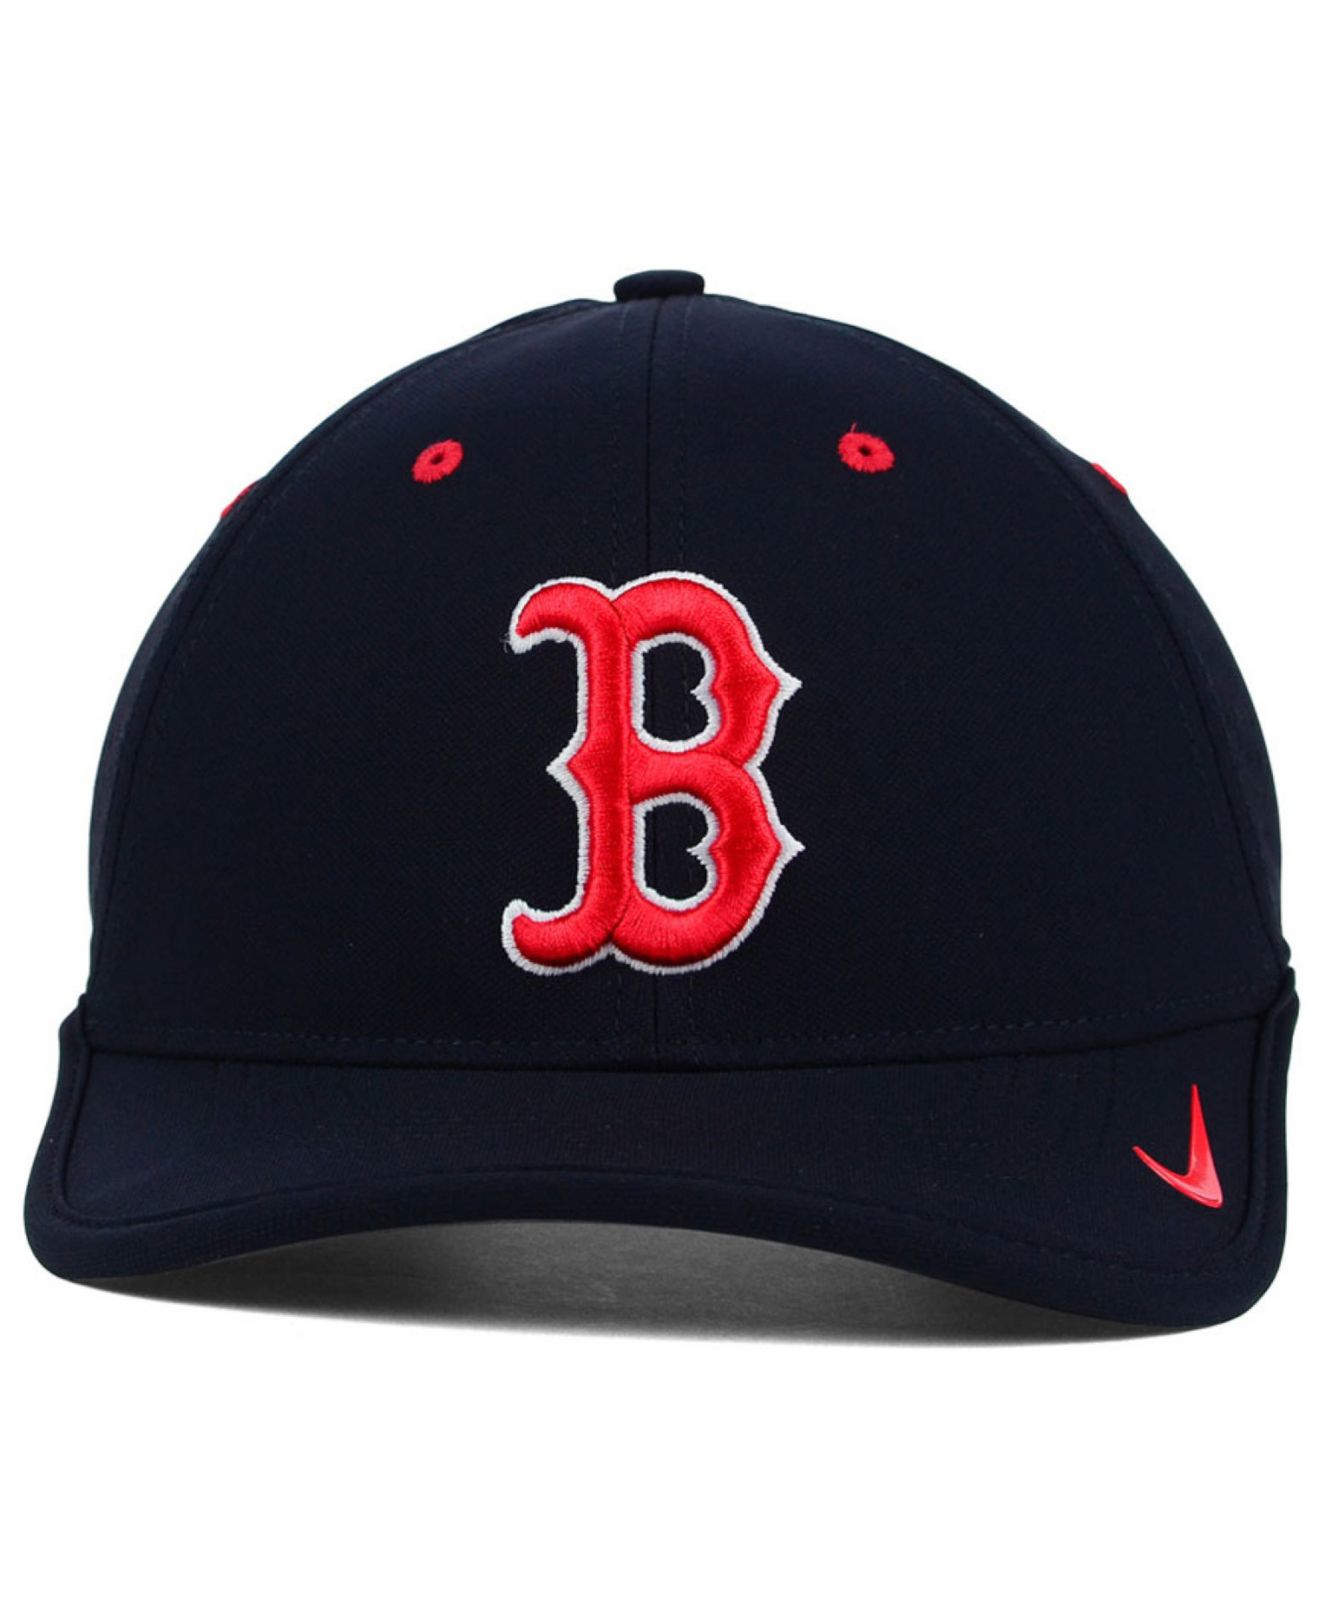 Lyst - Nike Boston Red Sox Vapor Swoosh Adjustable Cap in Blue for Men